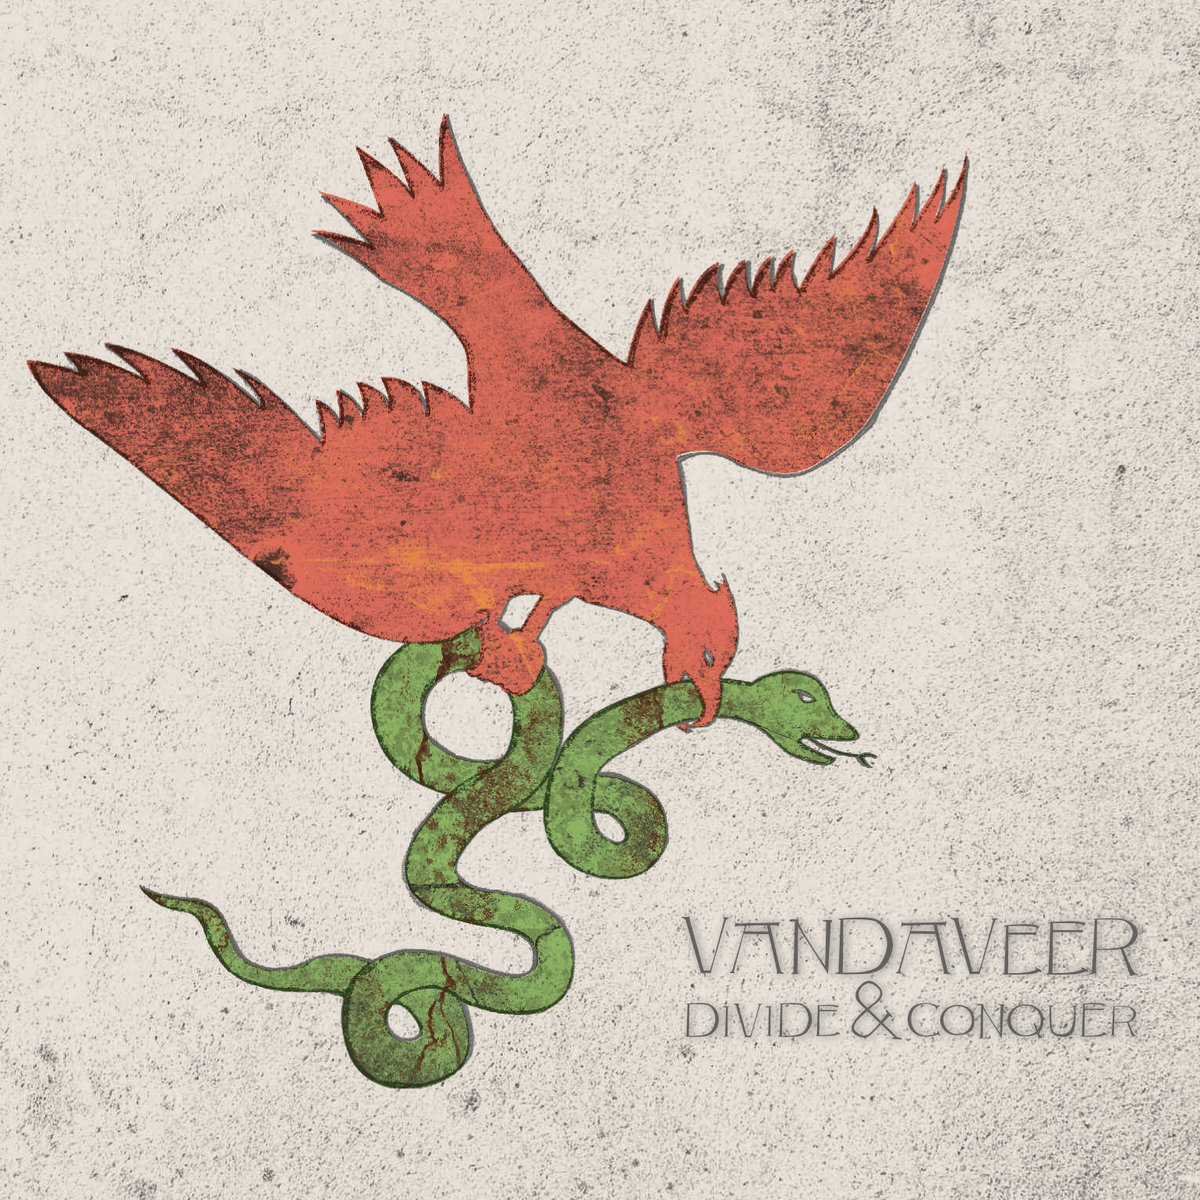 Vandaveer - Divide & Conquer (2009)